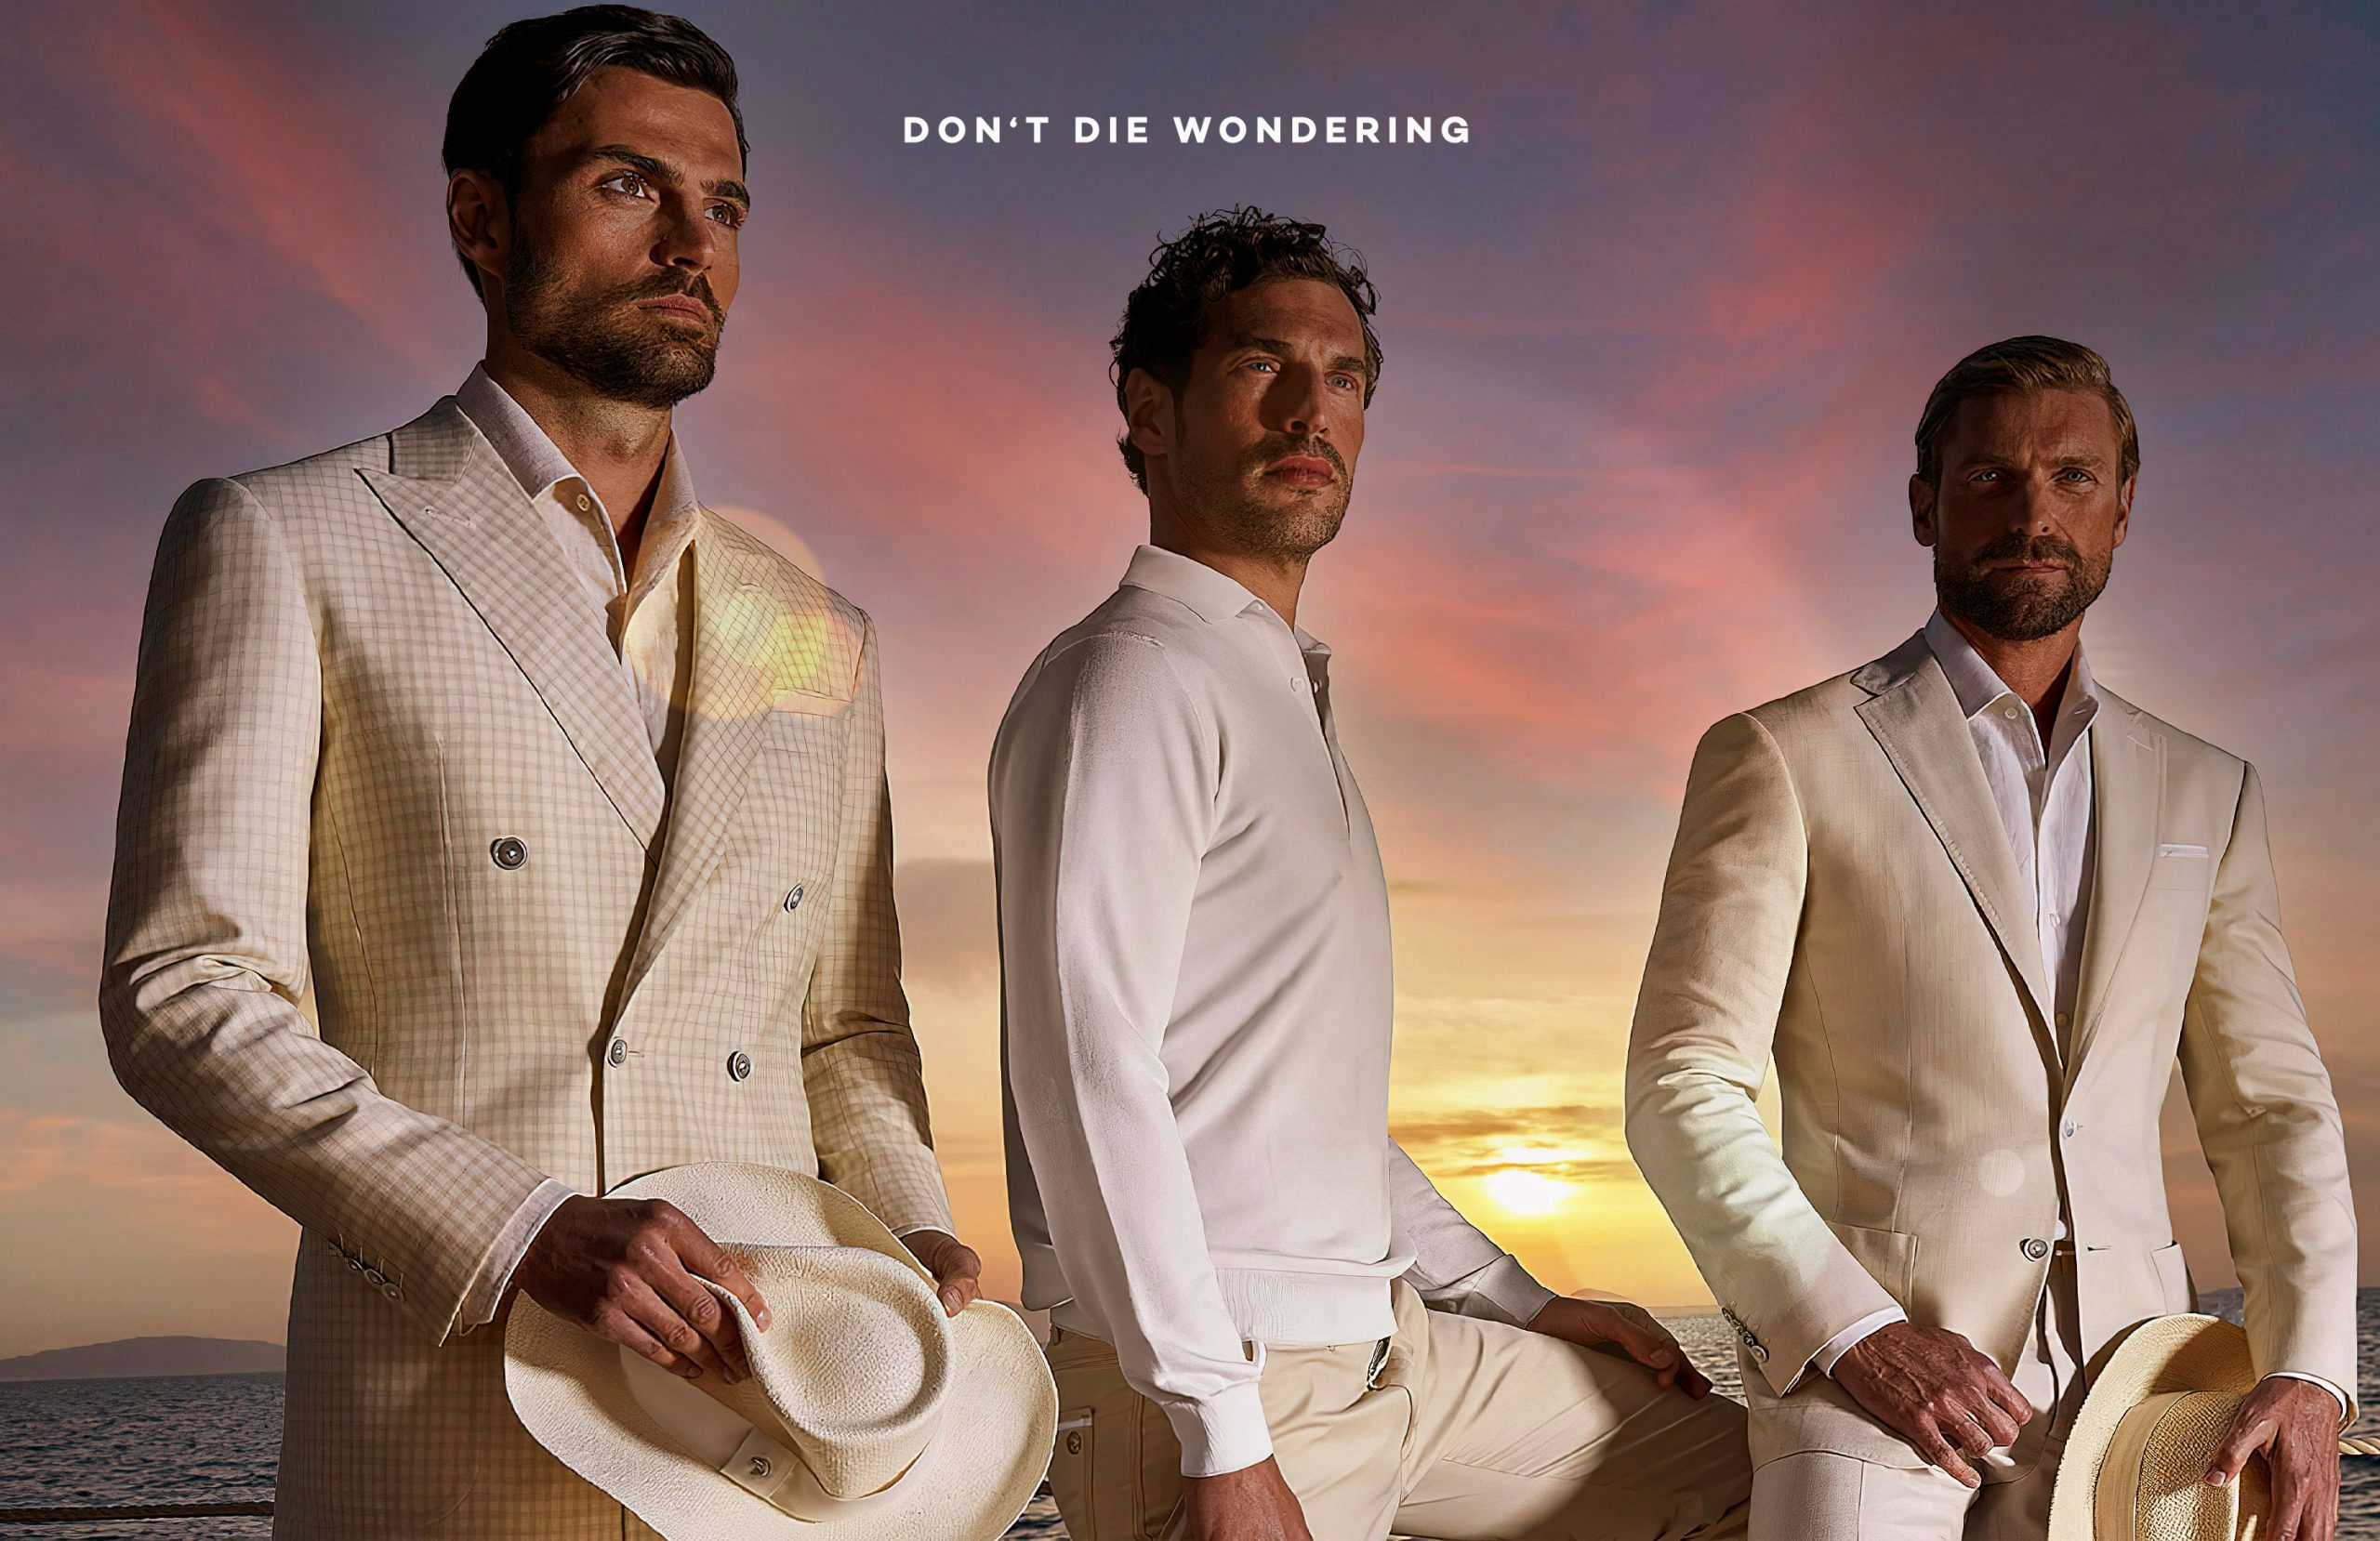 DDW’s Guide to Mediterranean Male Fashion in Summer 2022